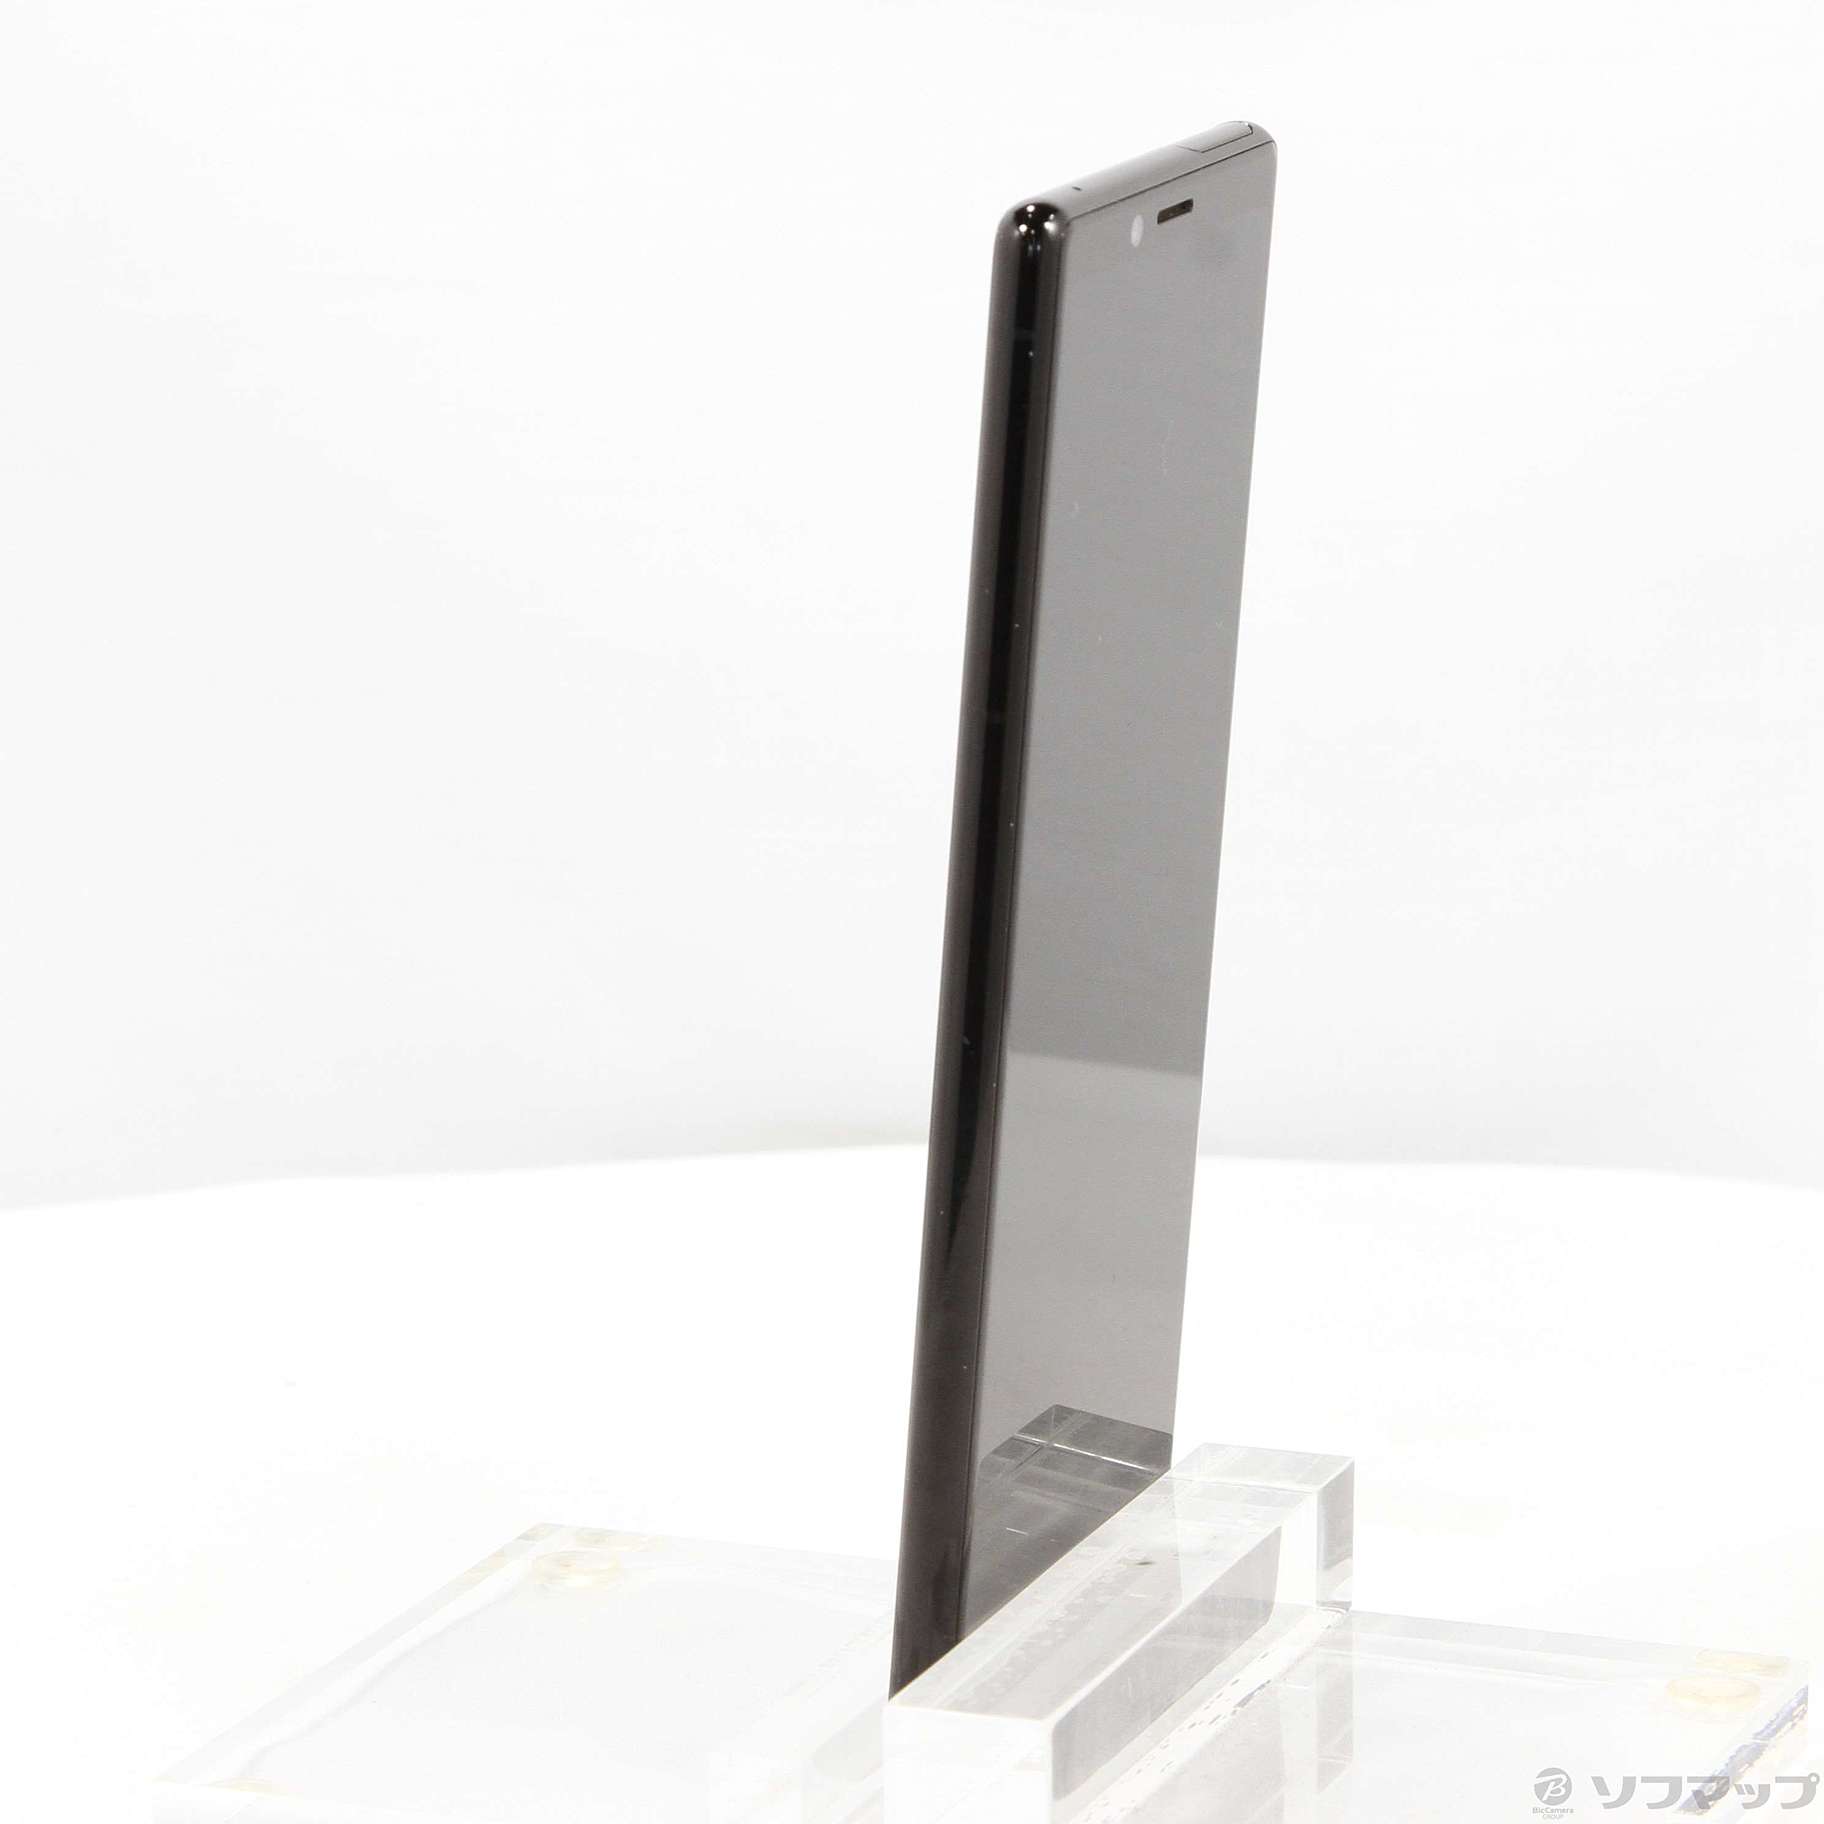 Xperia 1 Black 64GB ドコモ SO-03L Simフリー 黒